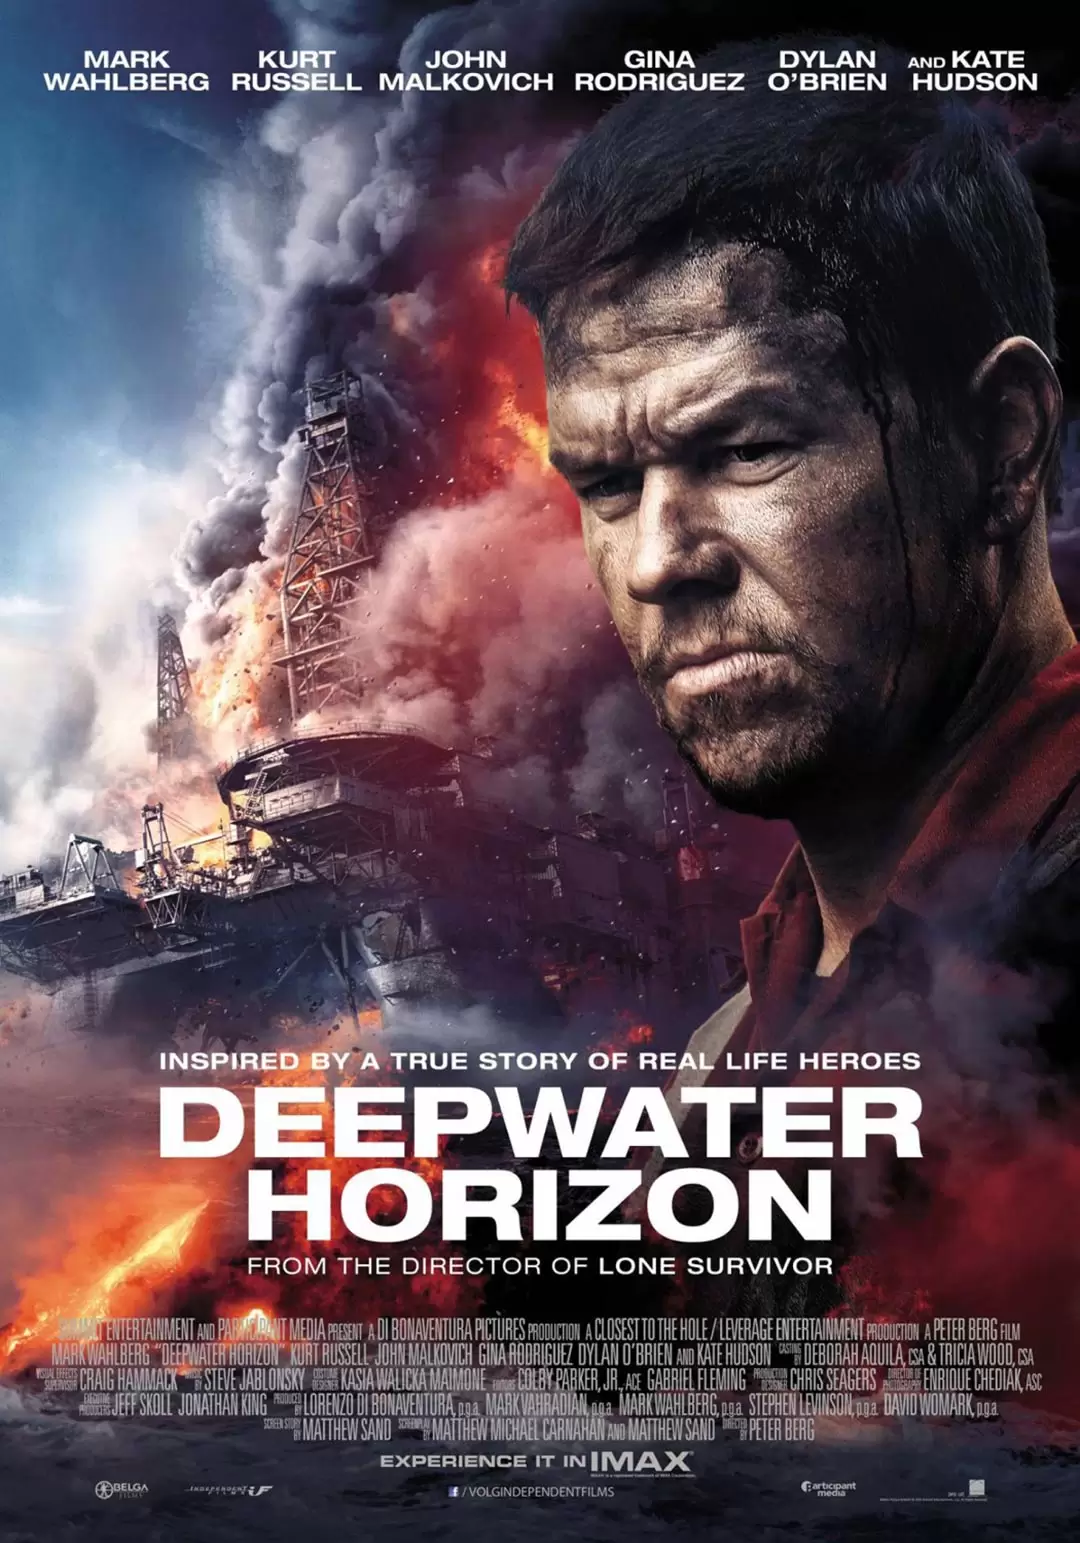 Deepwater horizon review poster